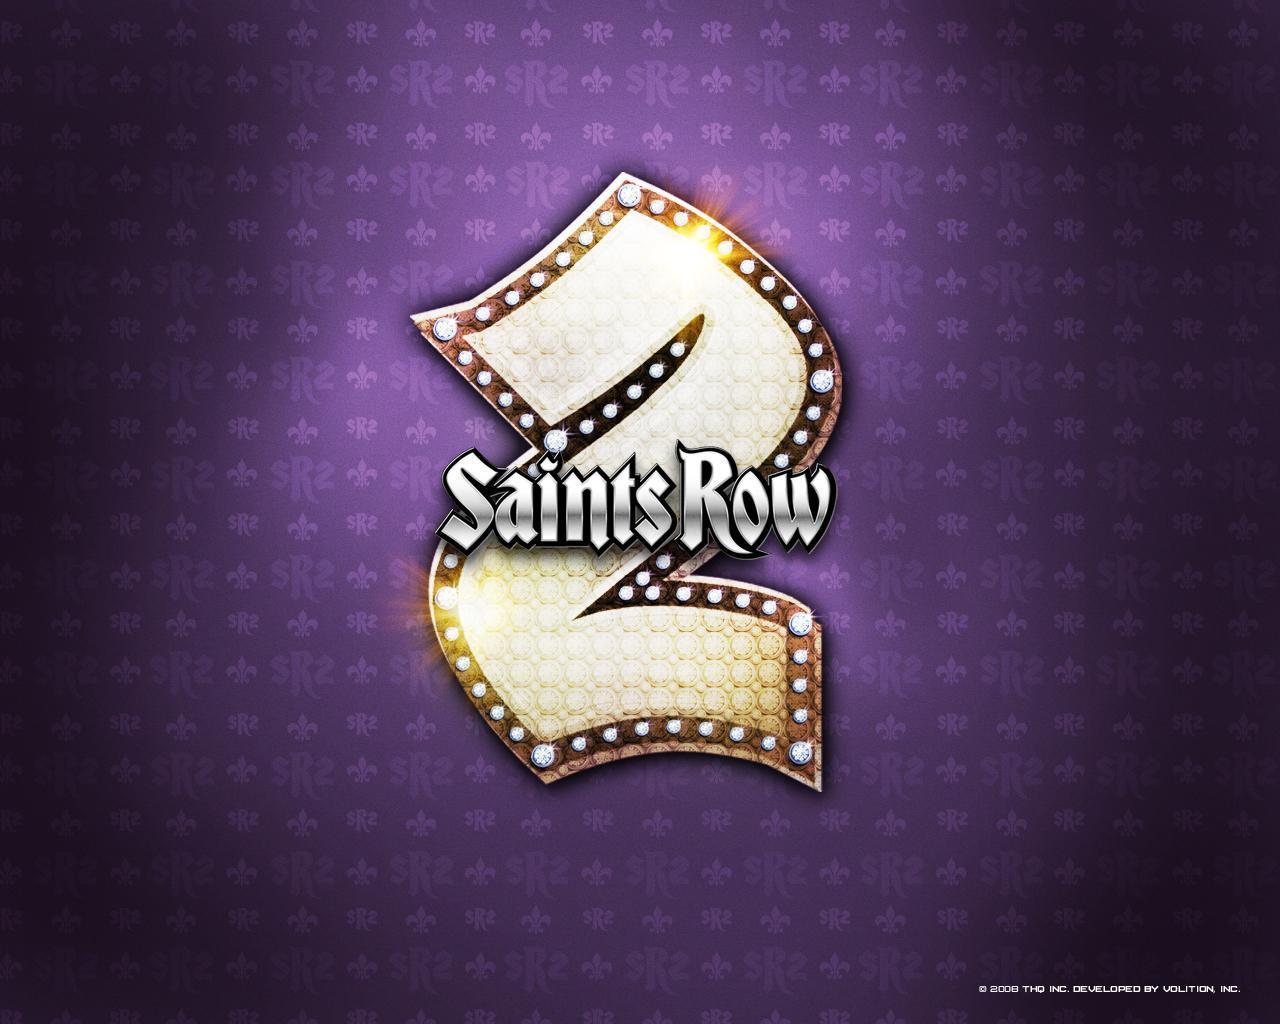 Saints Row Wallpaper